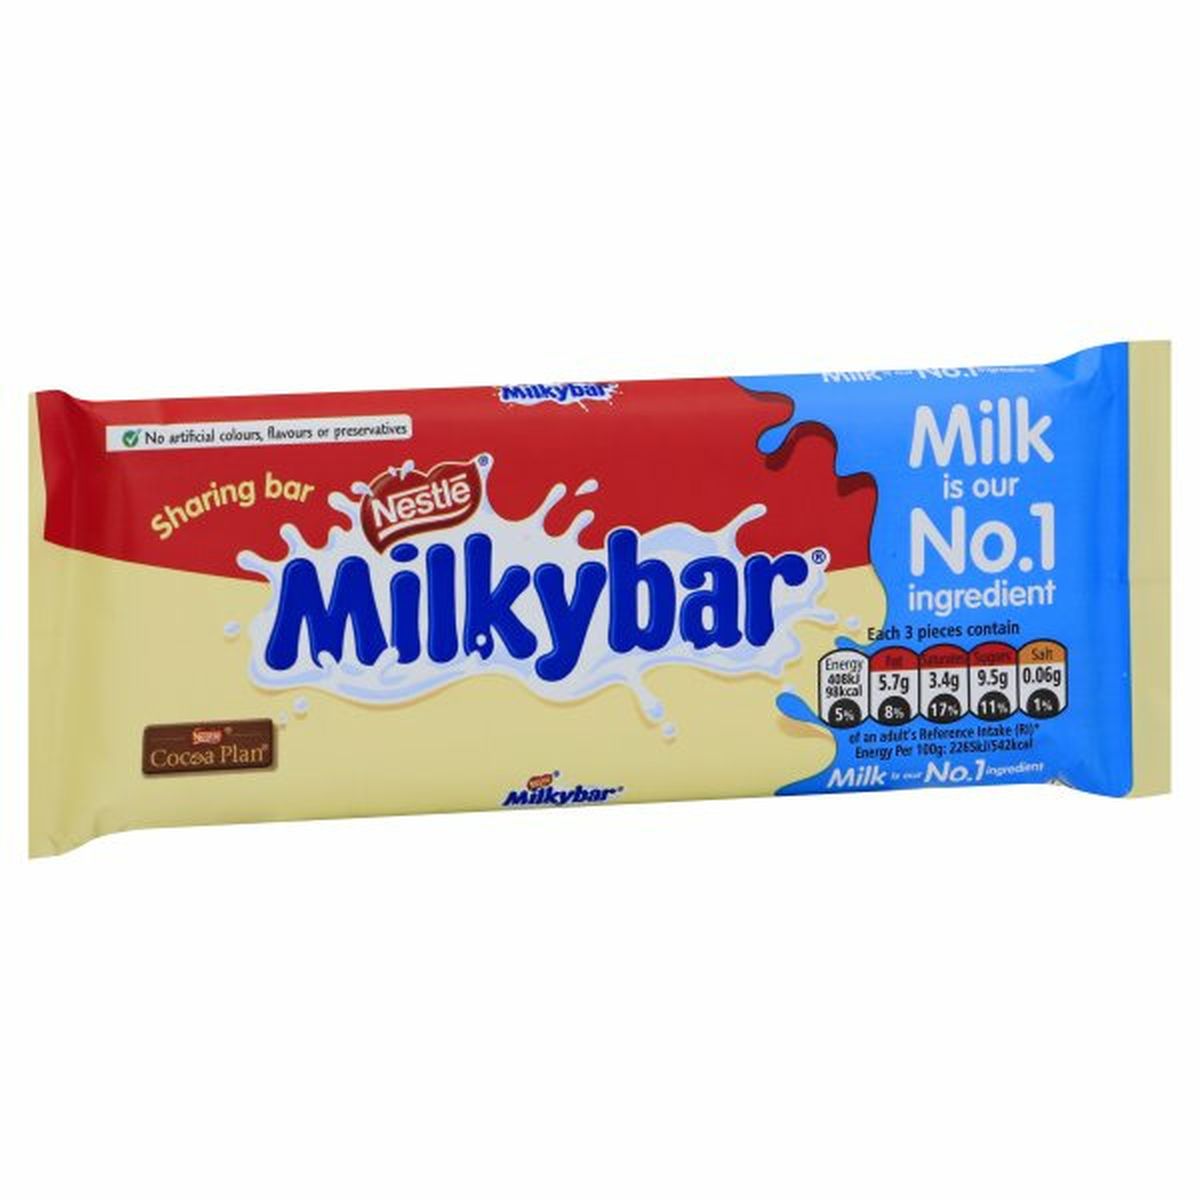 Calories in Nestle Milkybar, Sharing Bar